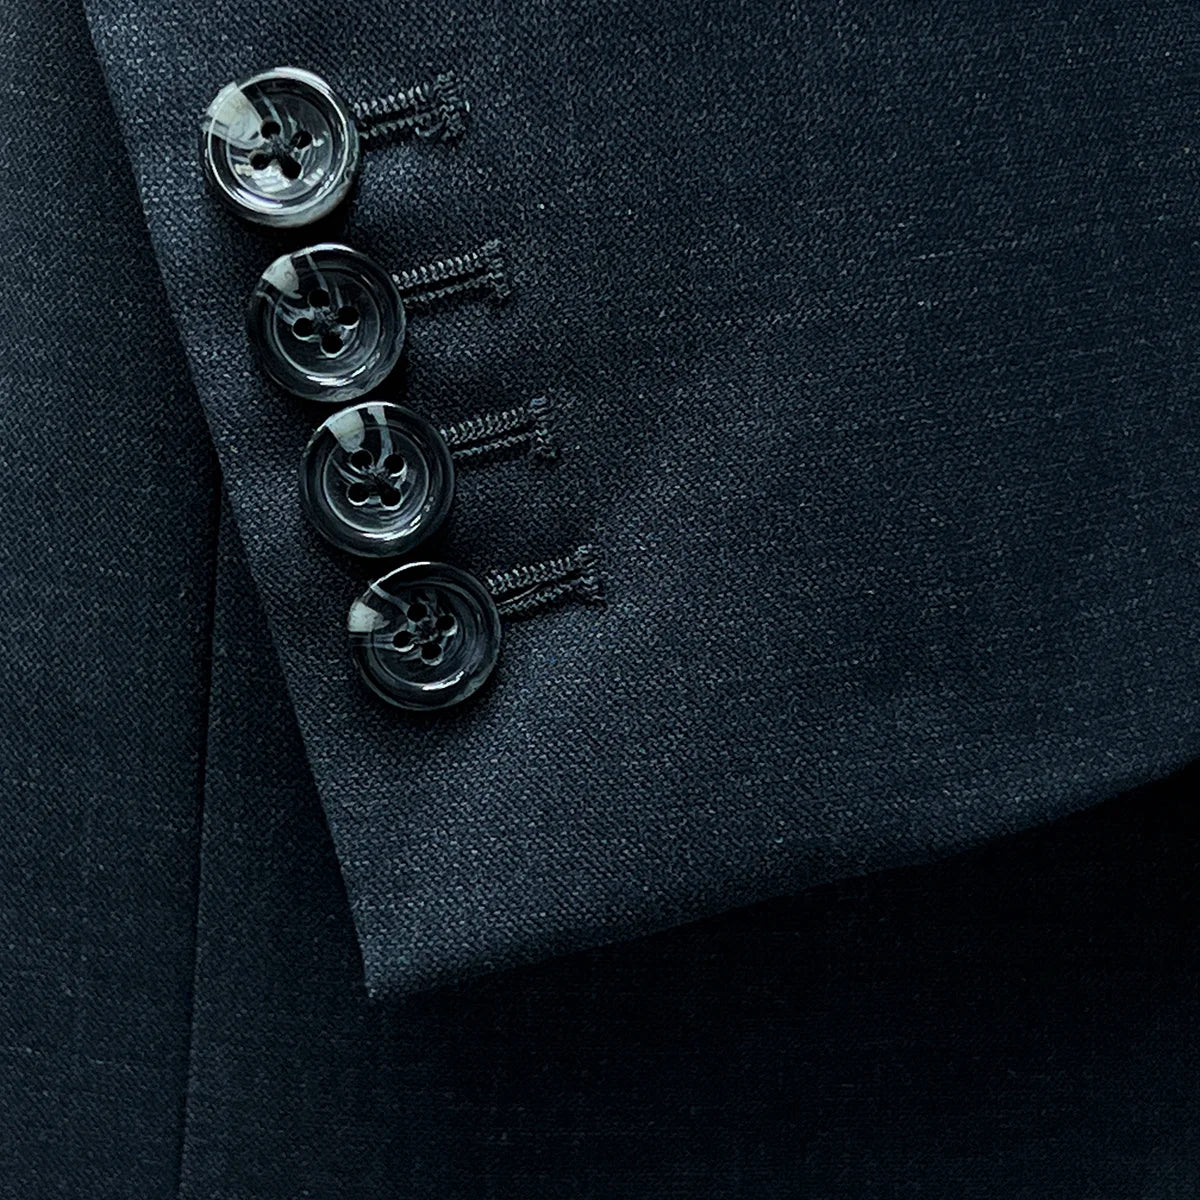 Functional sleeve buttonholes demonstrating practical design on a dark gray sharkskin suit.